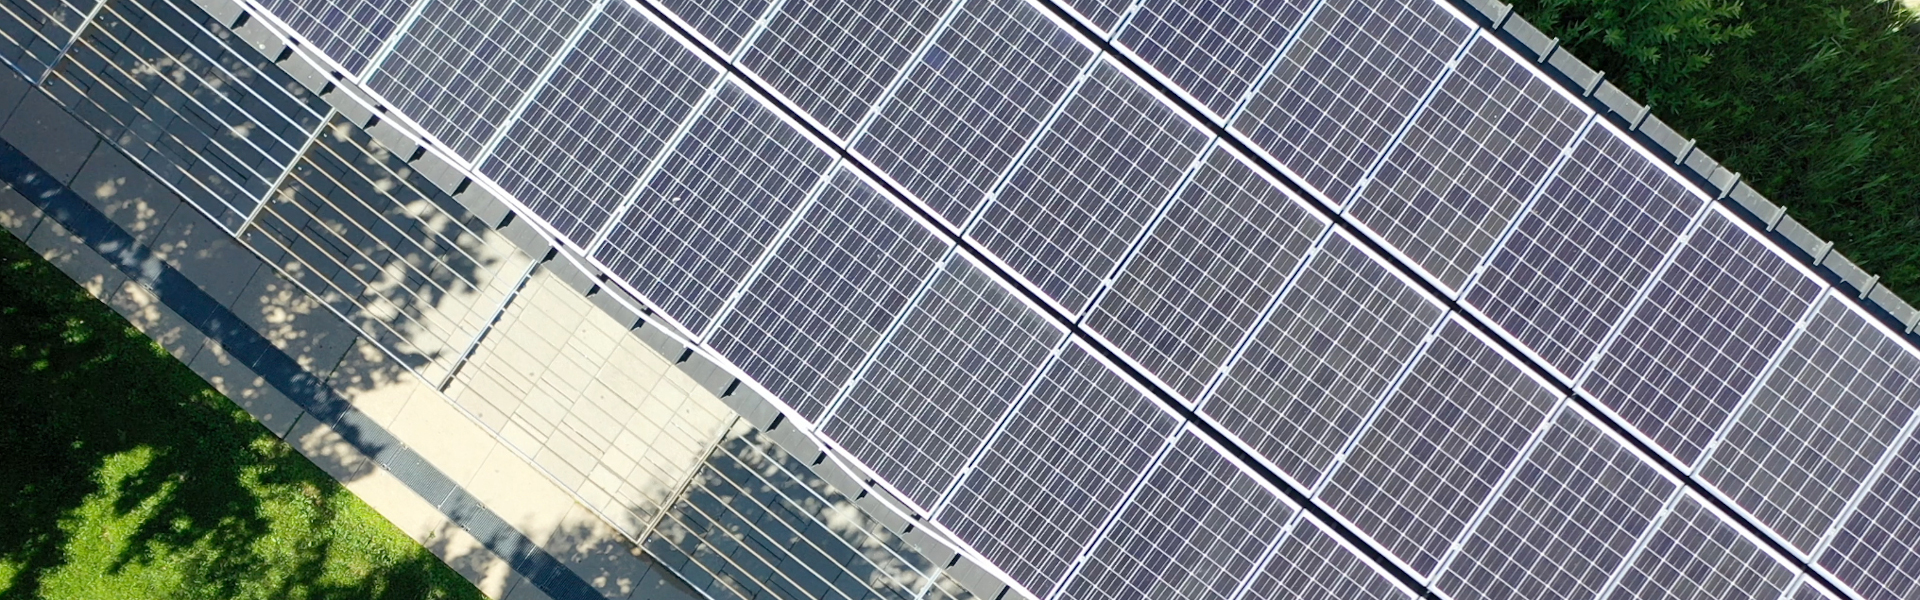 Solar panels drone view